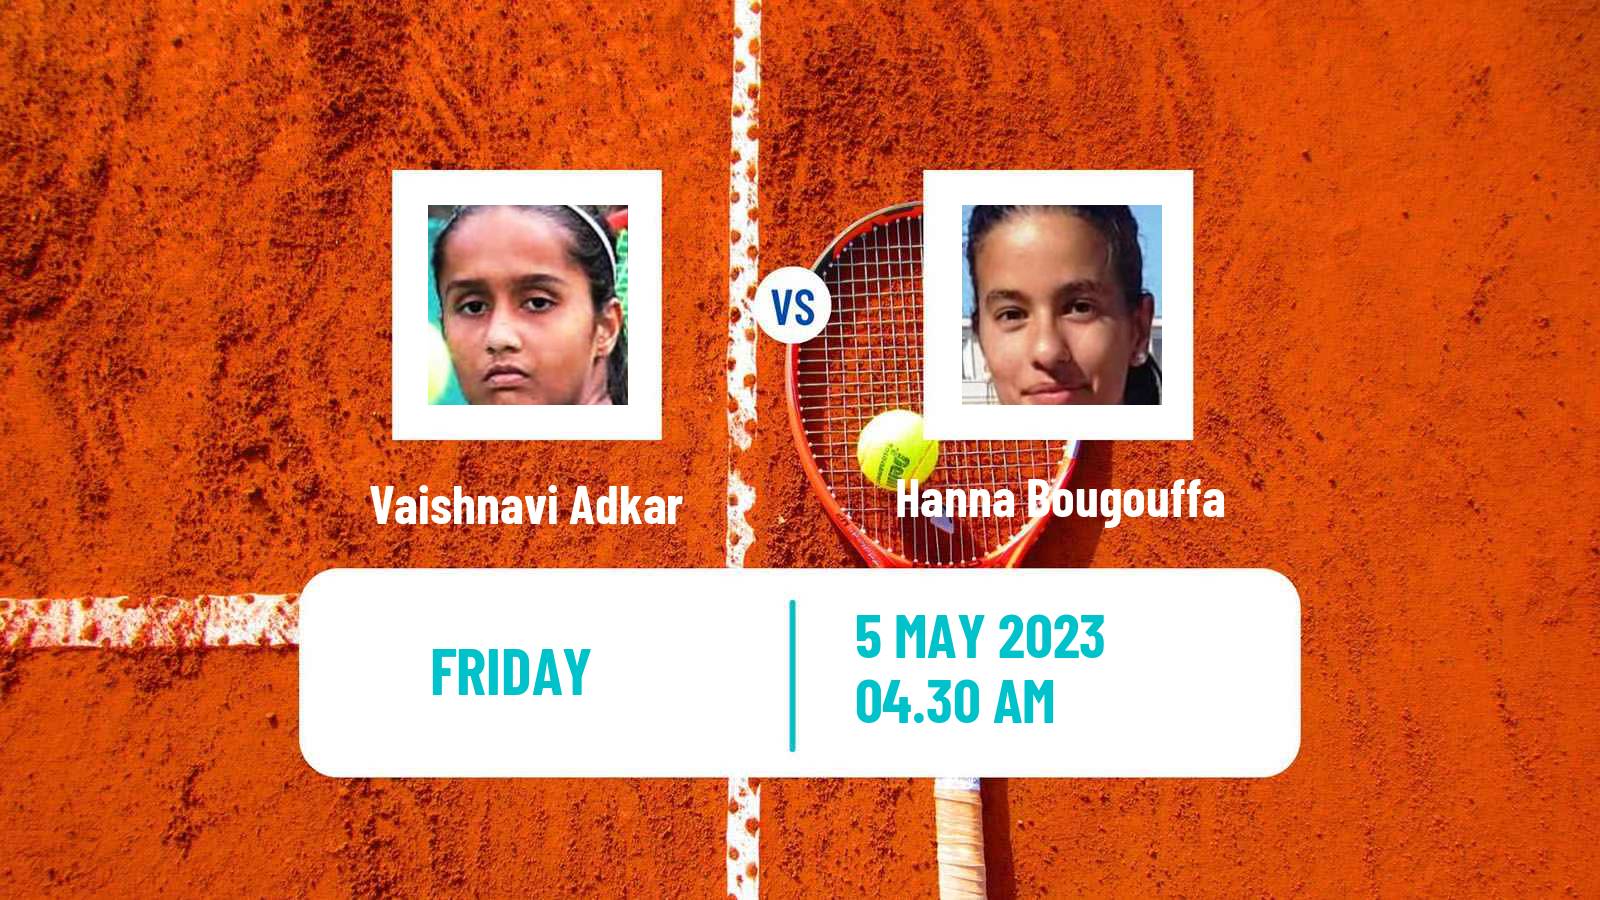 Tennis ITF Tournaments Vaishnavi Adkar - Hanna Bougouffa